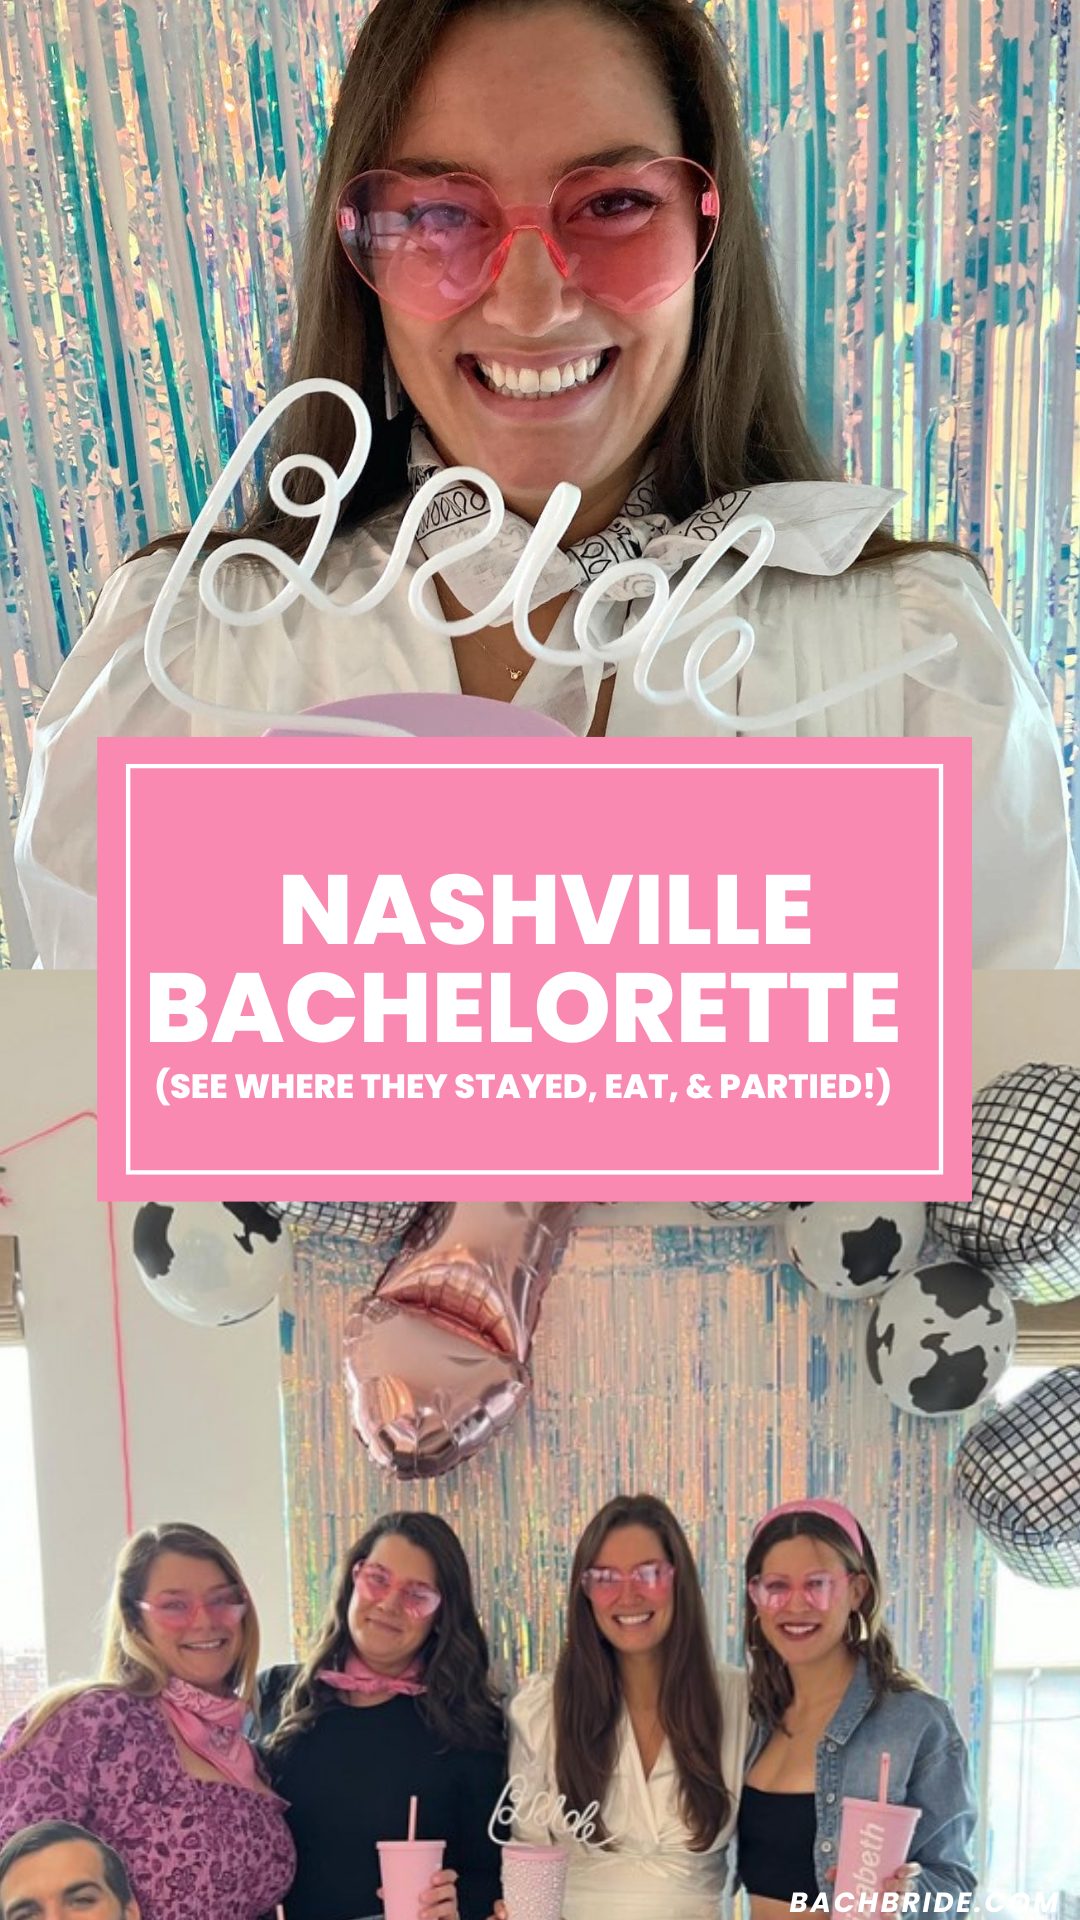 Nashville Bachelorette Gift - Bridesmaid Gifts Boutique